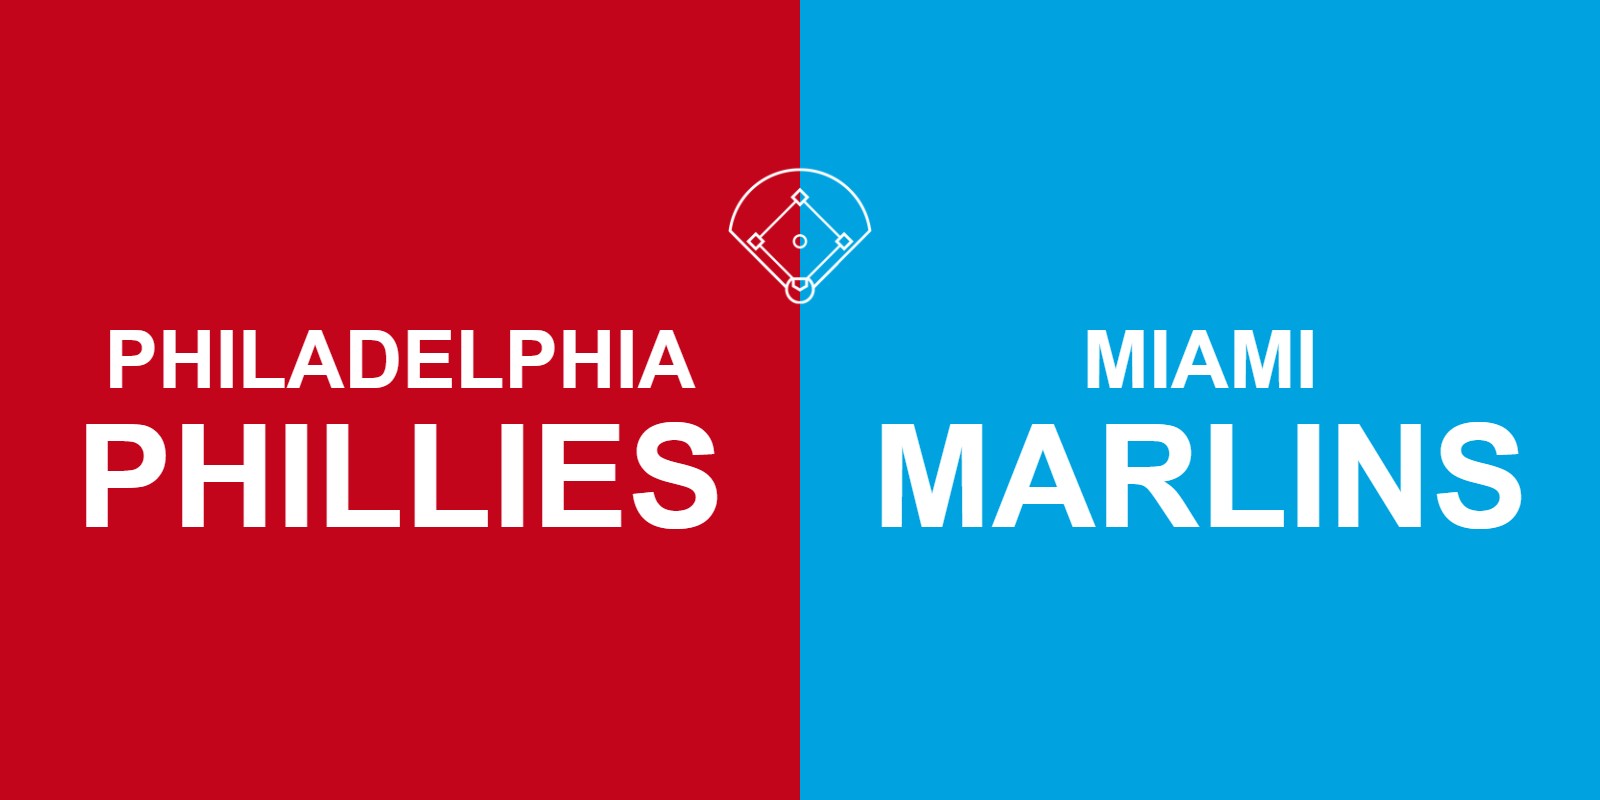 Phillies vs Marlins